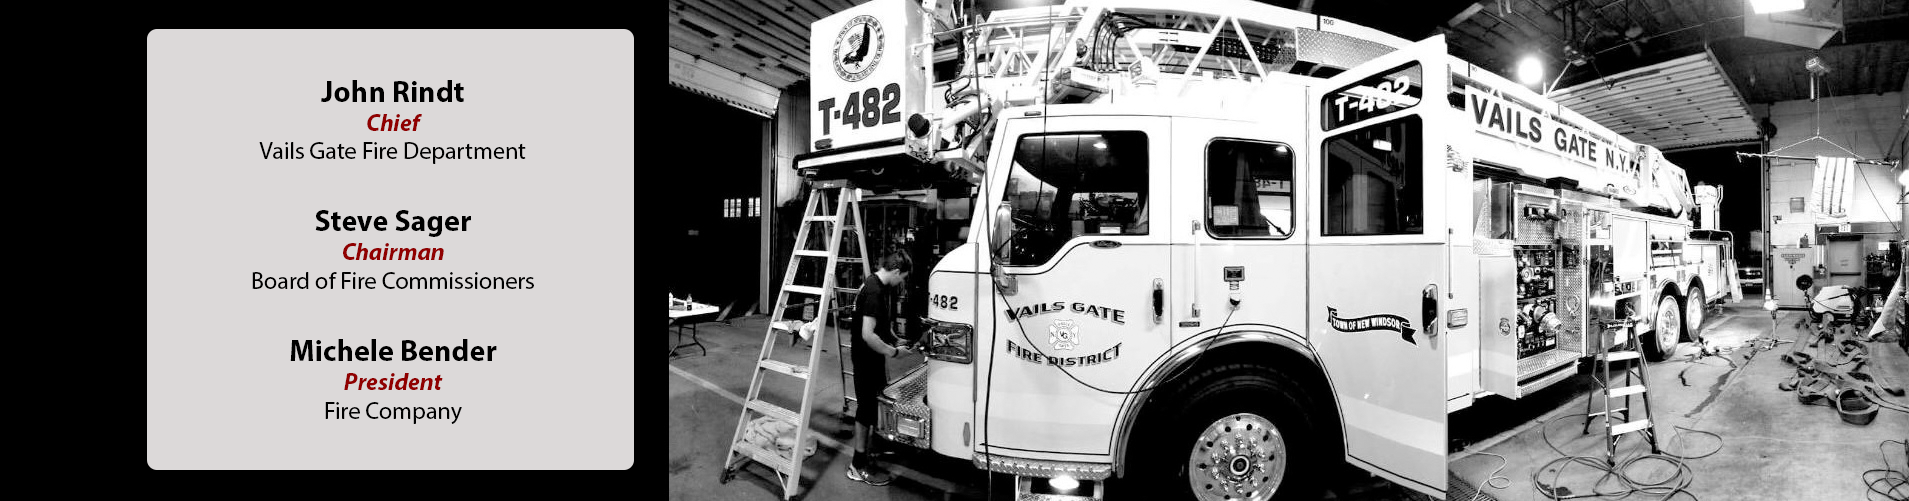 Vails Gate Fire Department